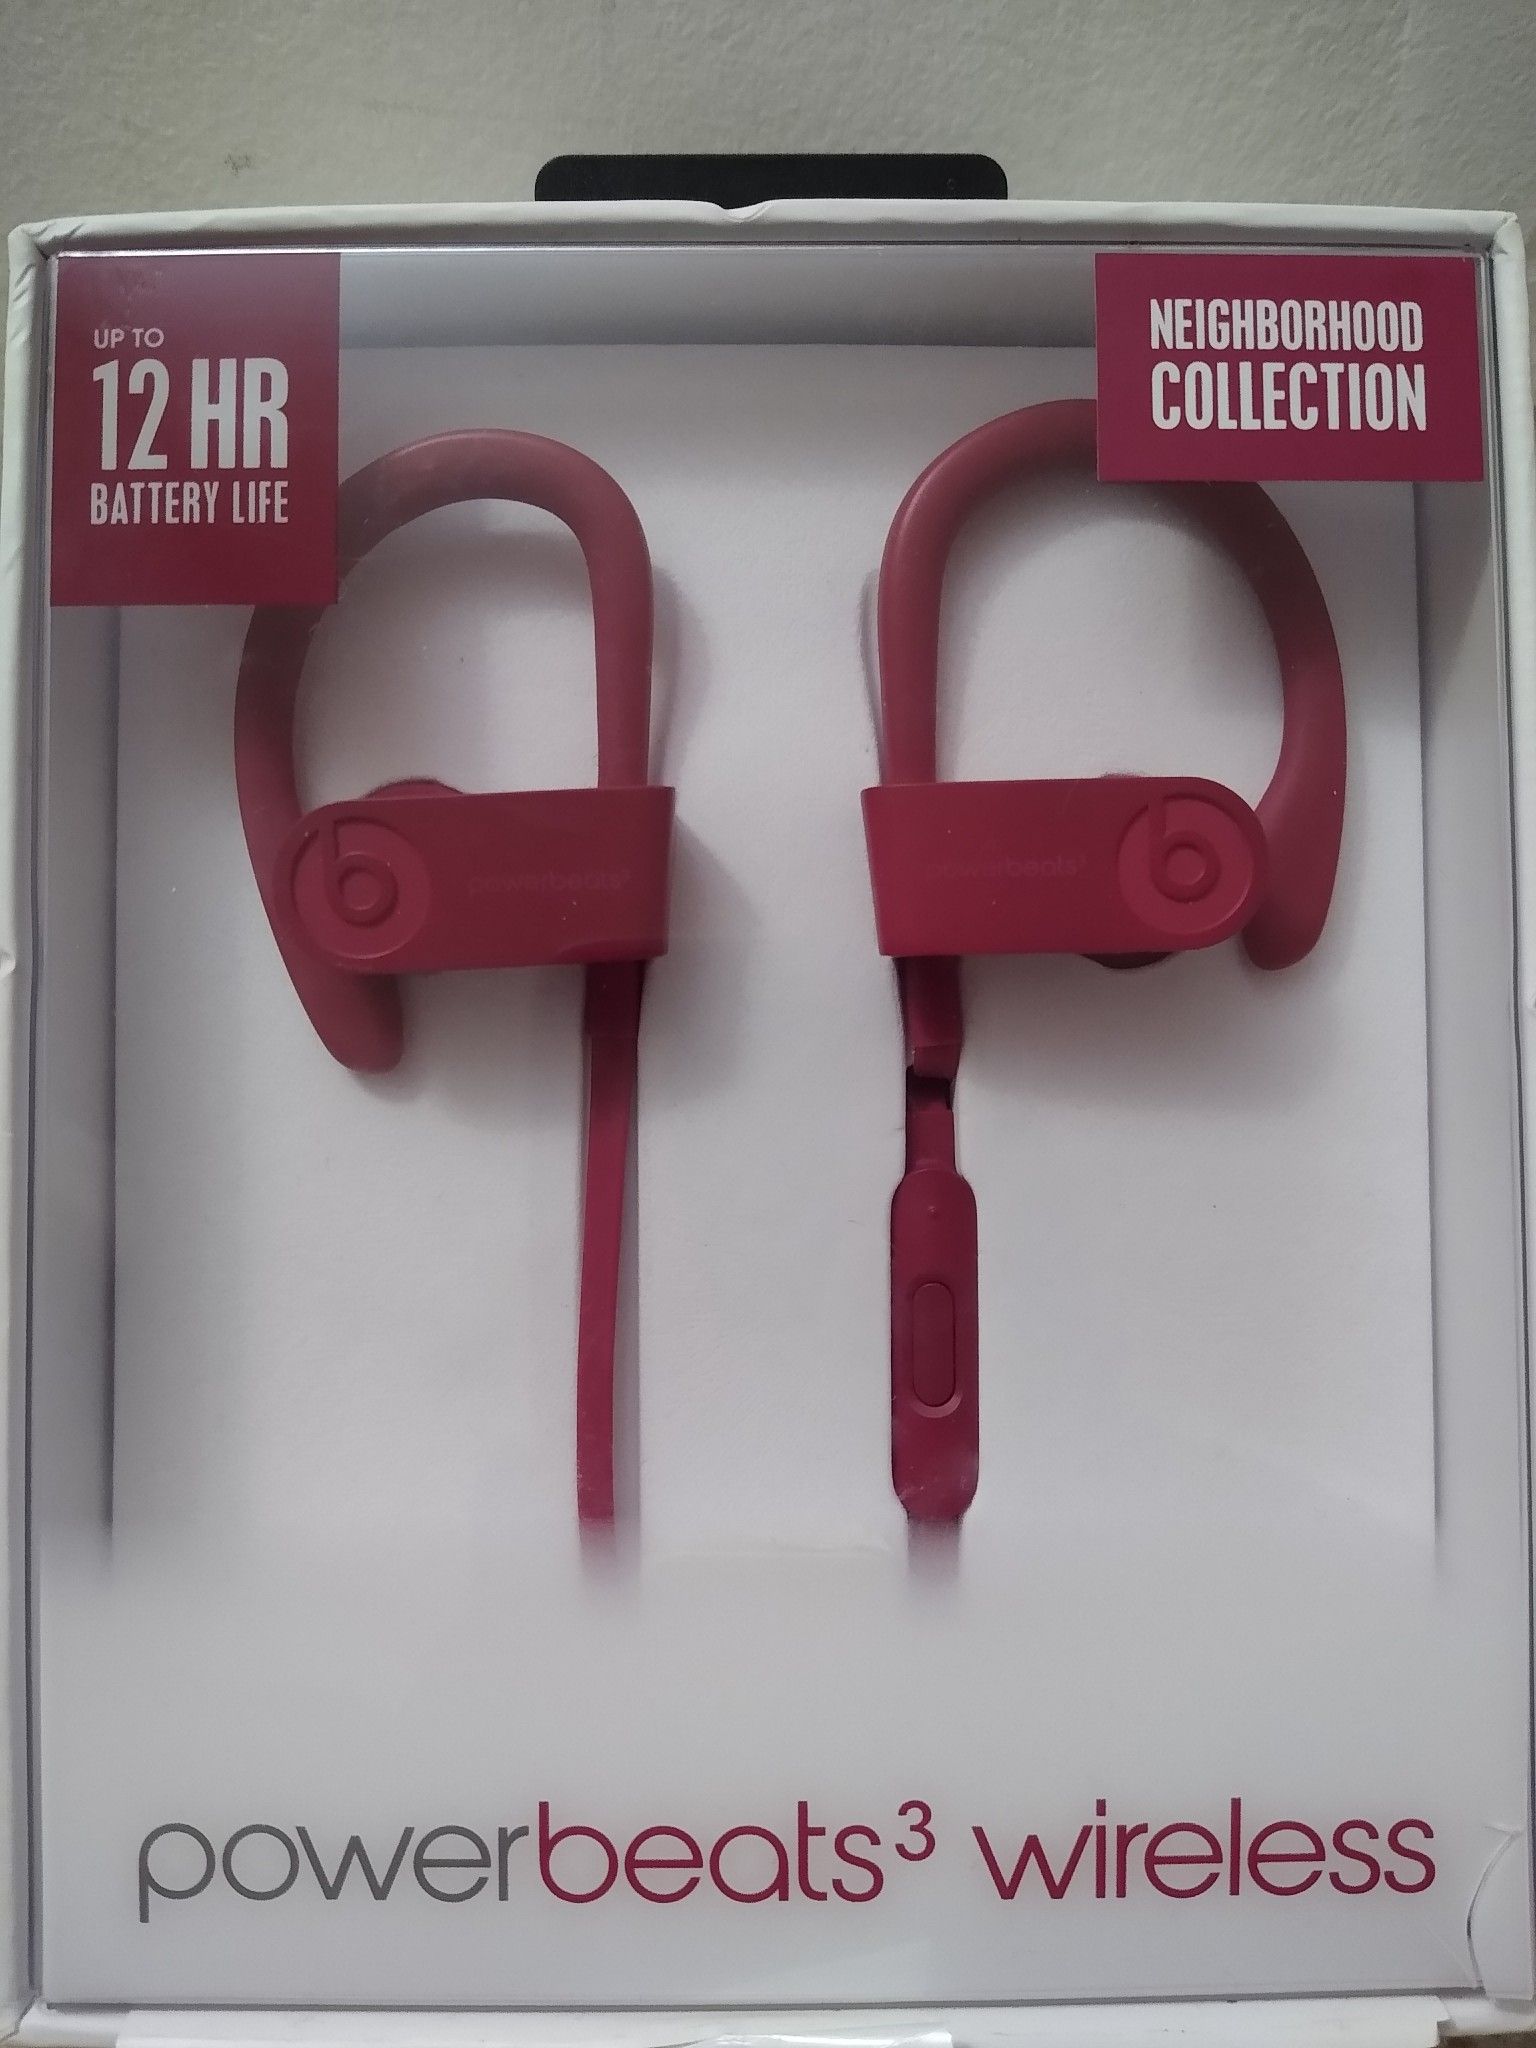 Beats Powerbeats 3 Wireless Earbuds Neighborhood Collection